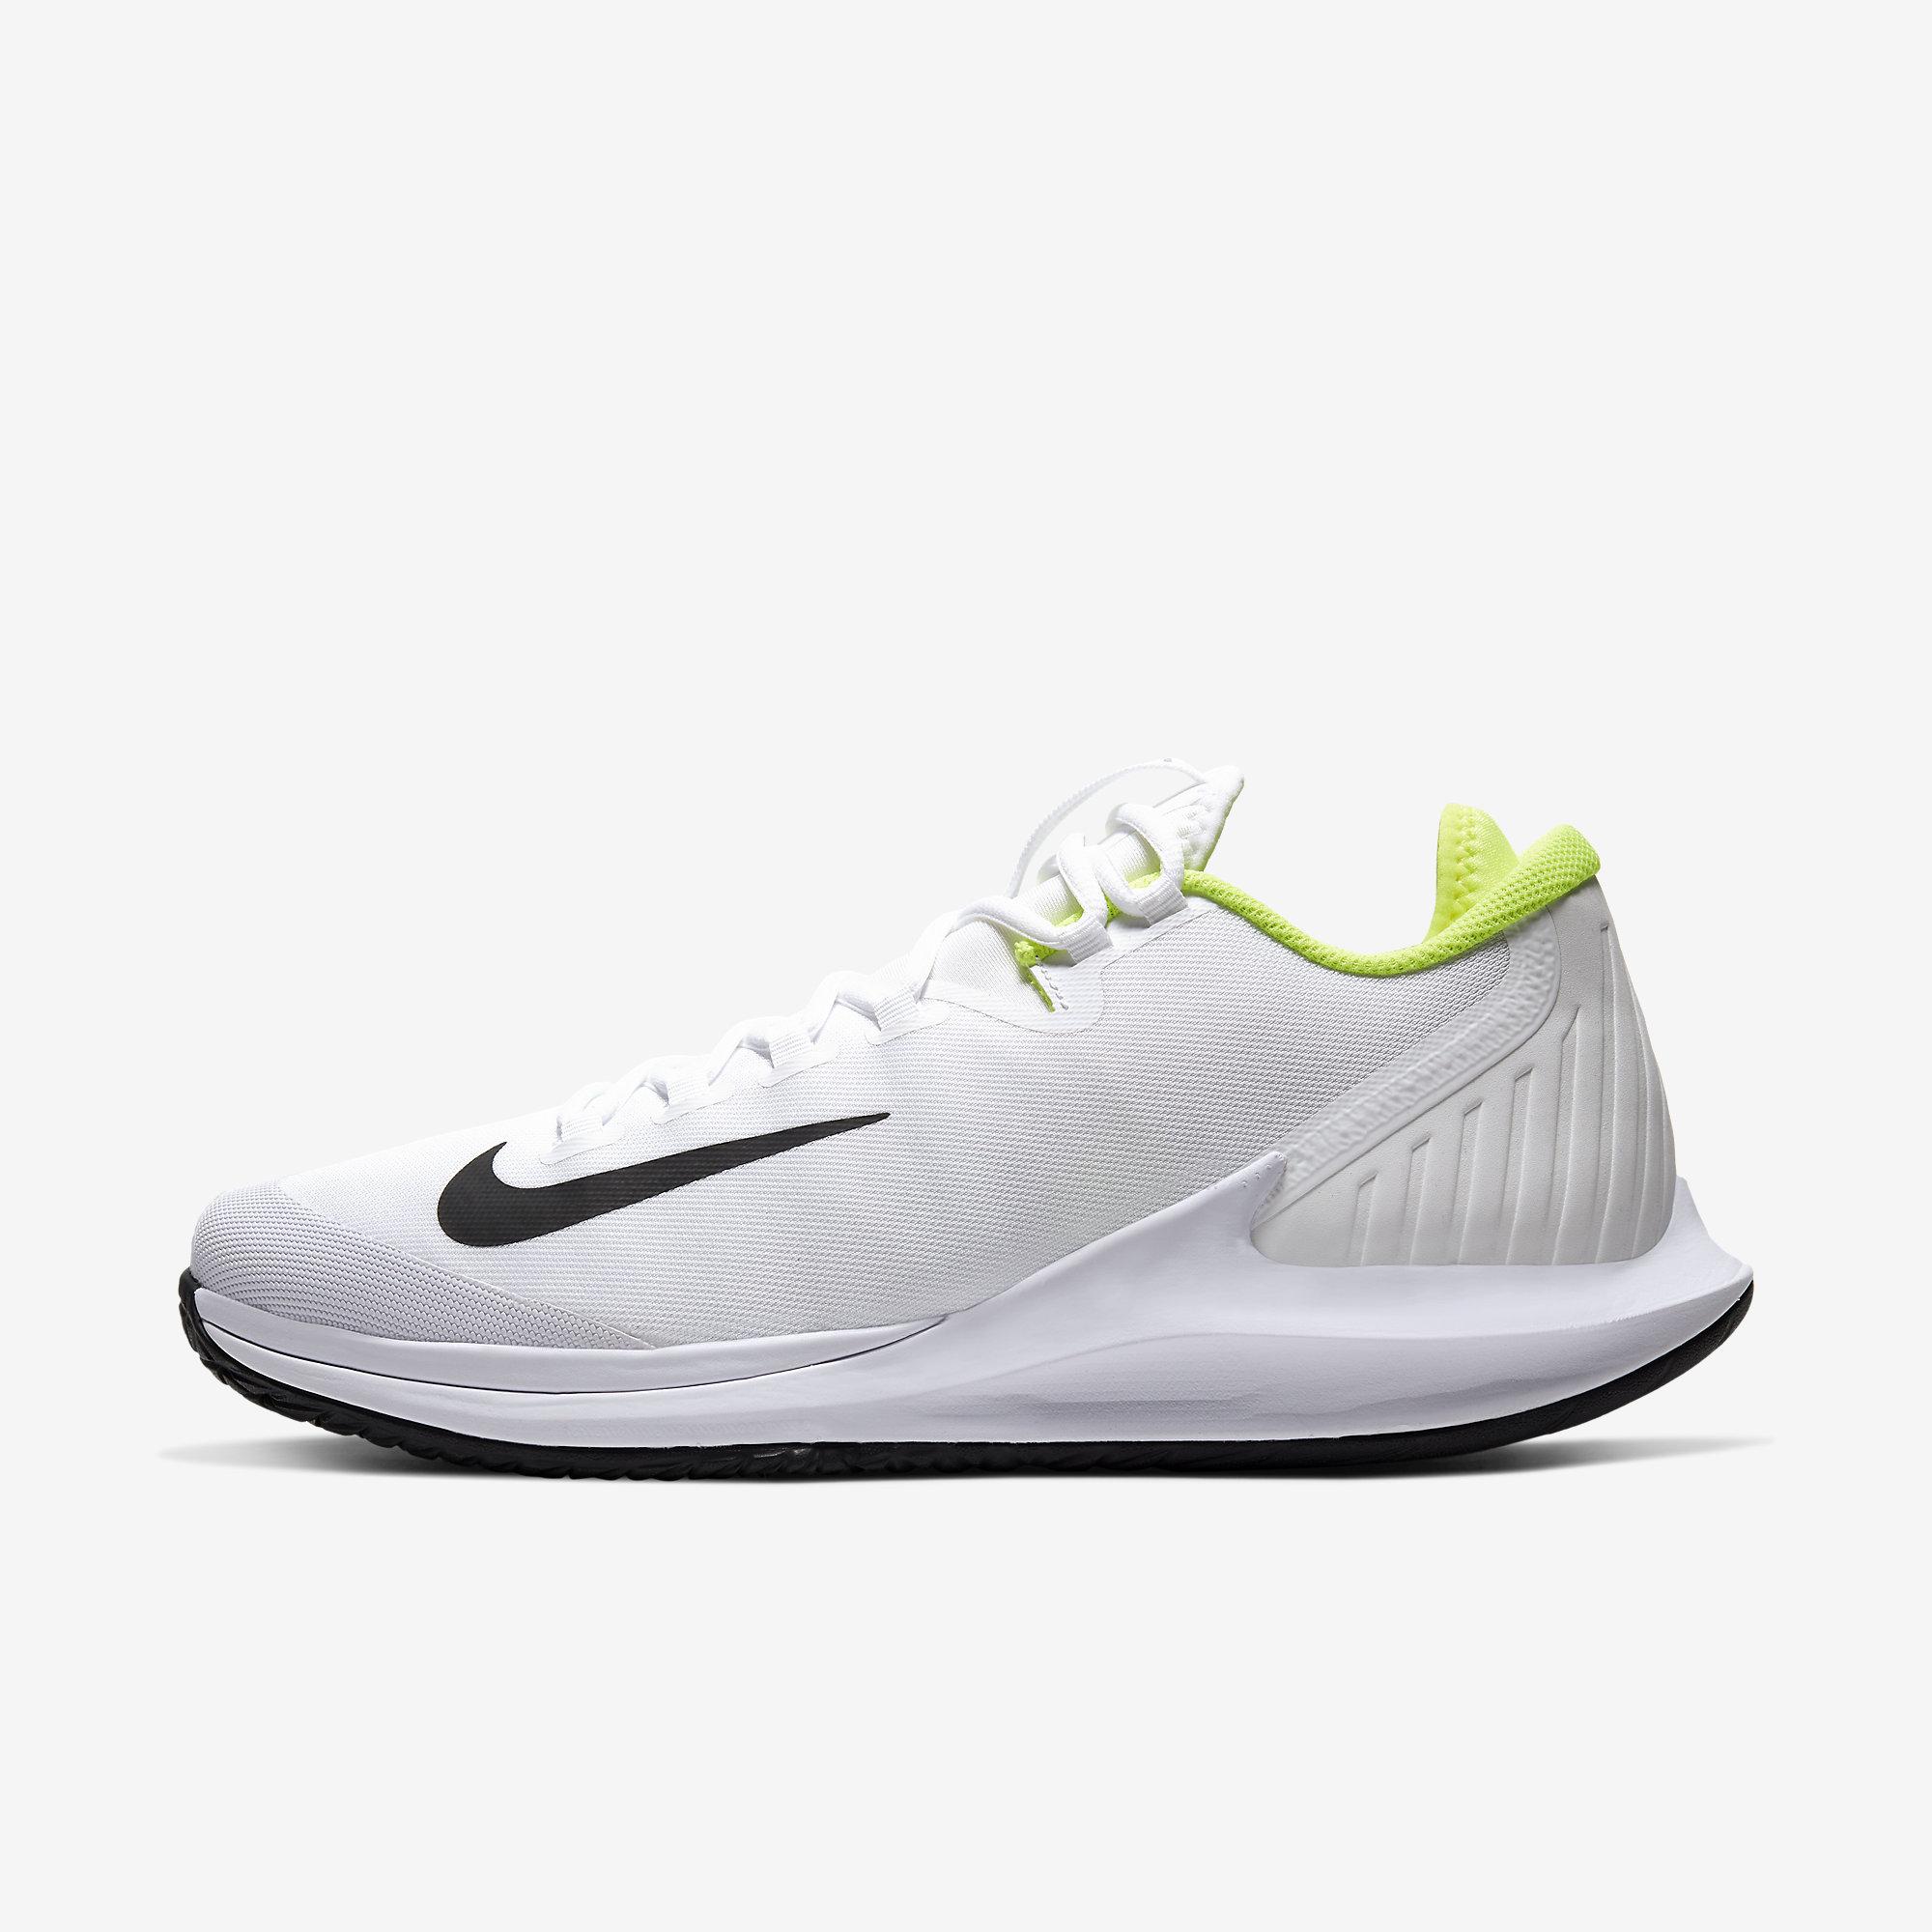 Nike Mens Air Zoom Zero Tennis Shoes - White/Volt - Tennisnuts.com